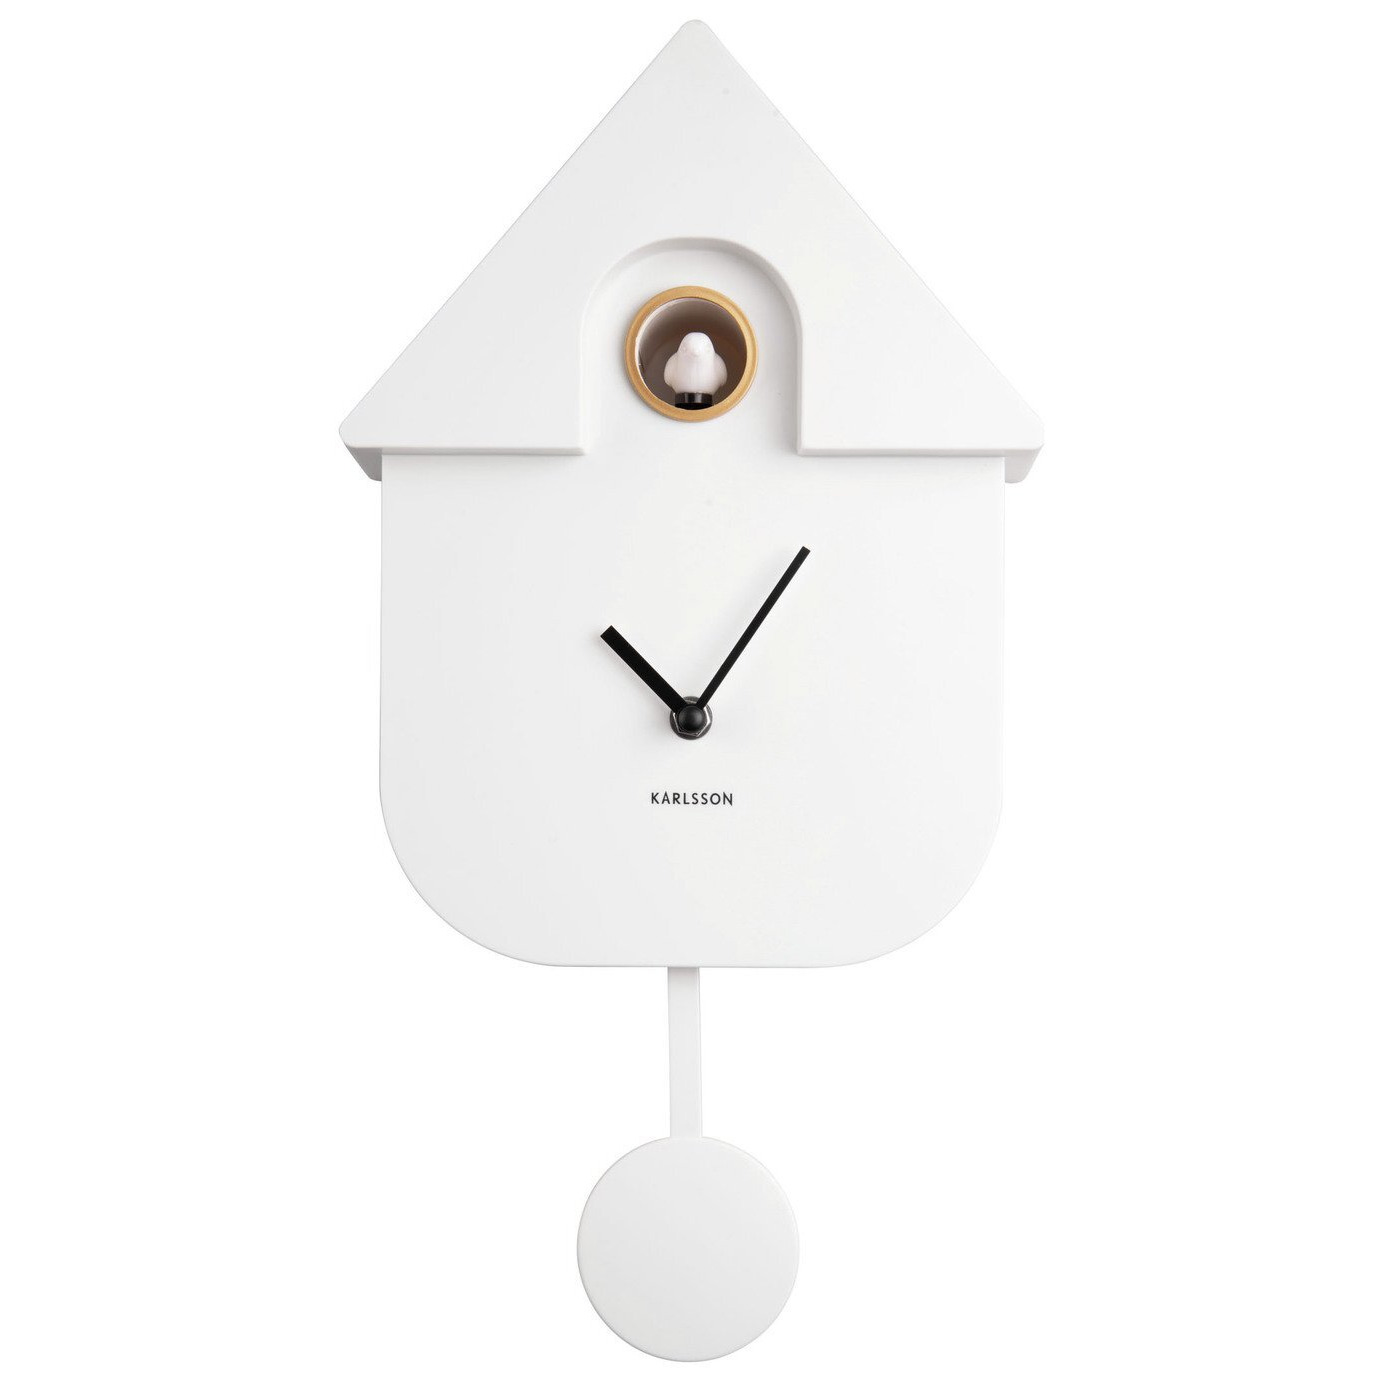 Karlsson Modern Cuckoo Pendulum Wall Clock - White - image 1